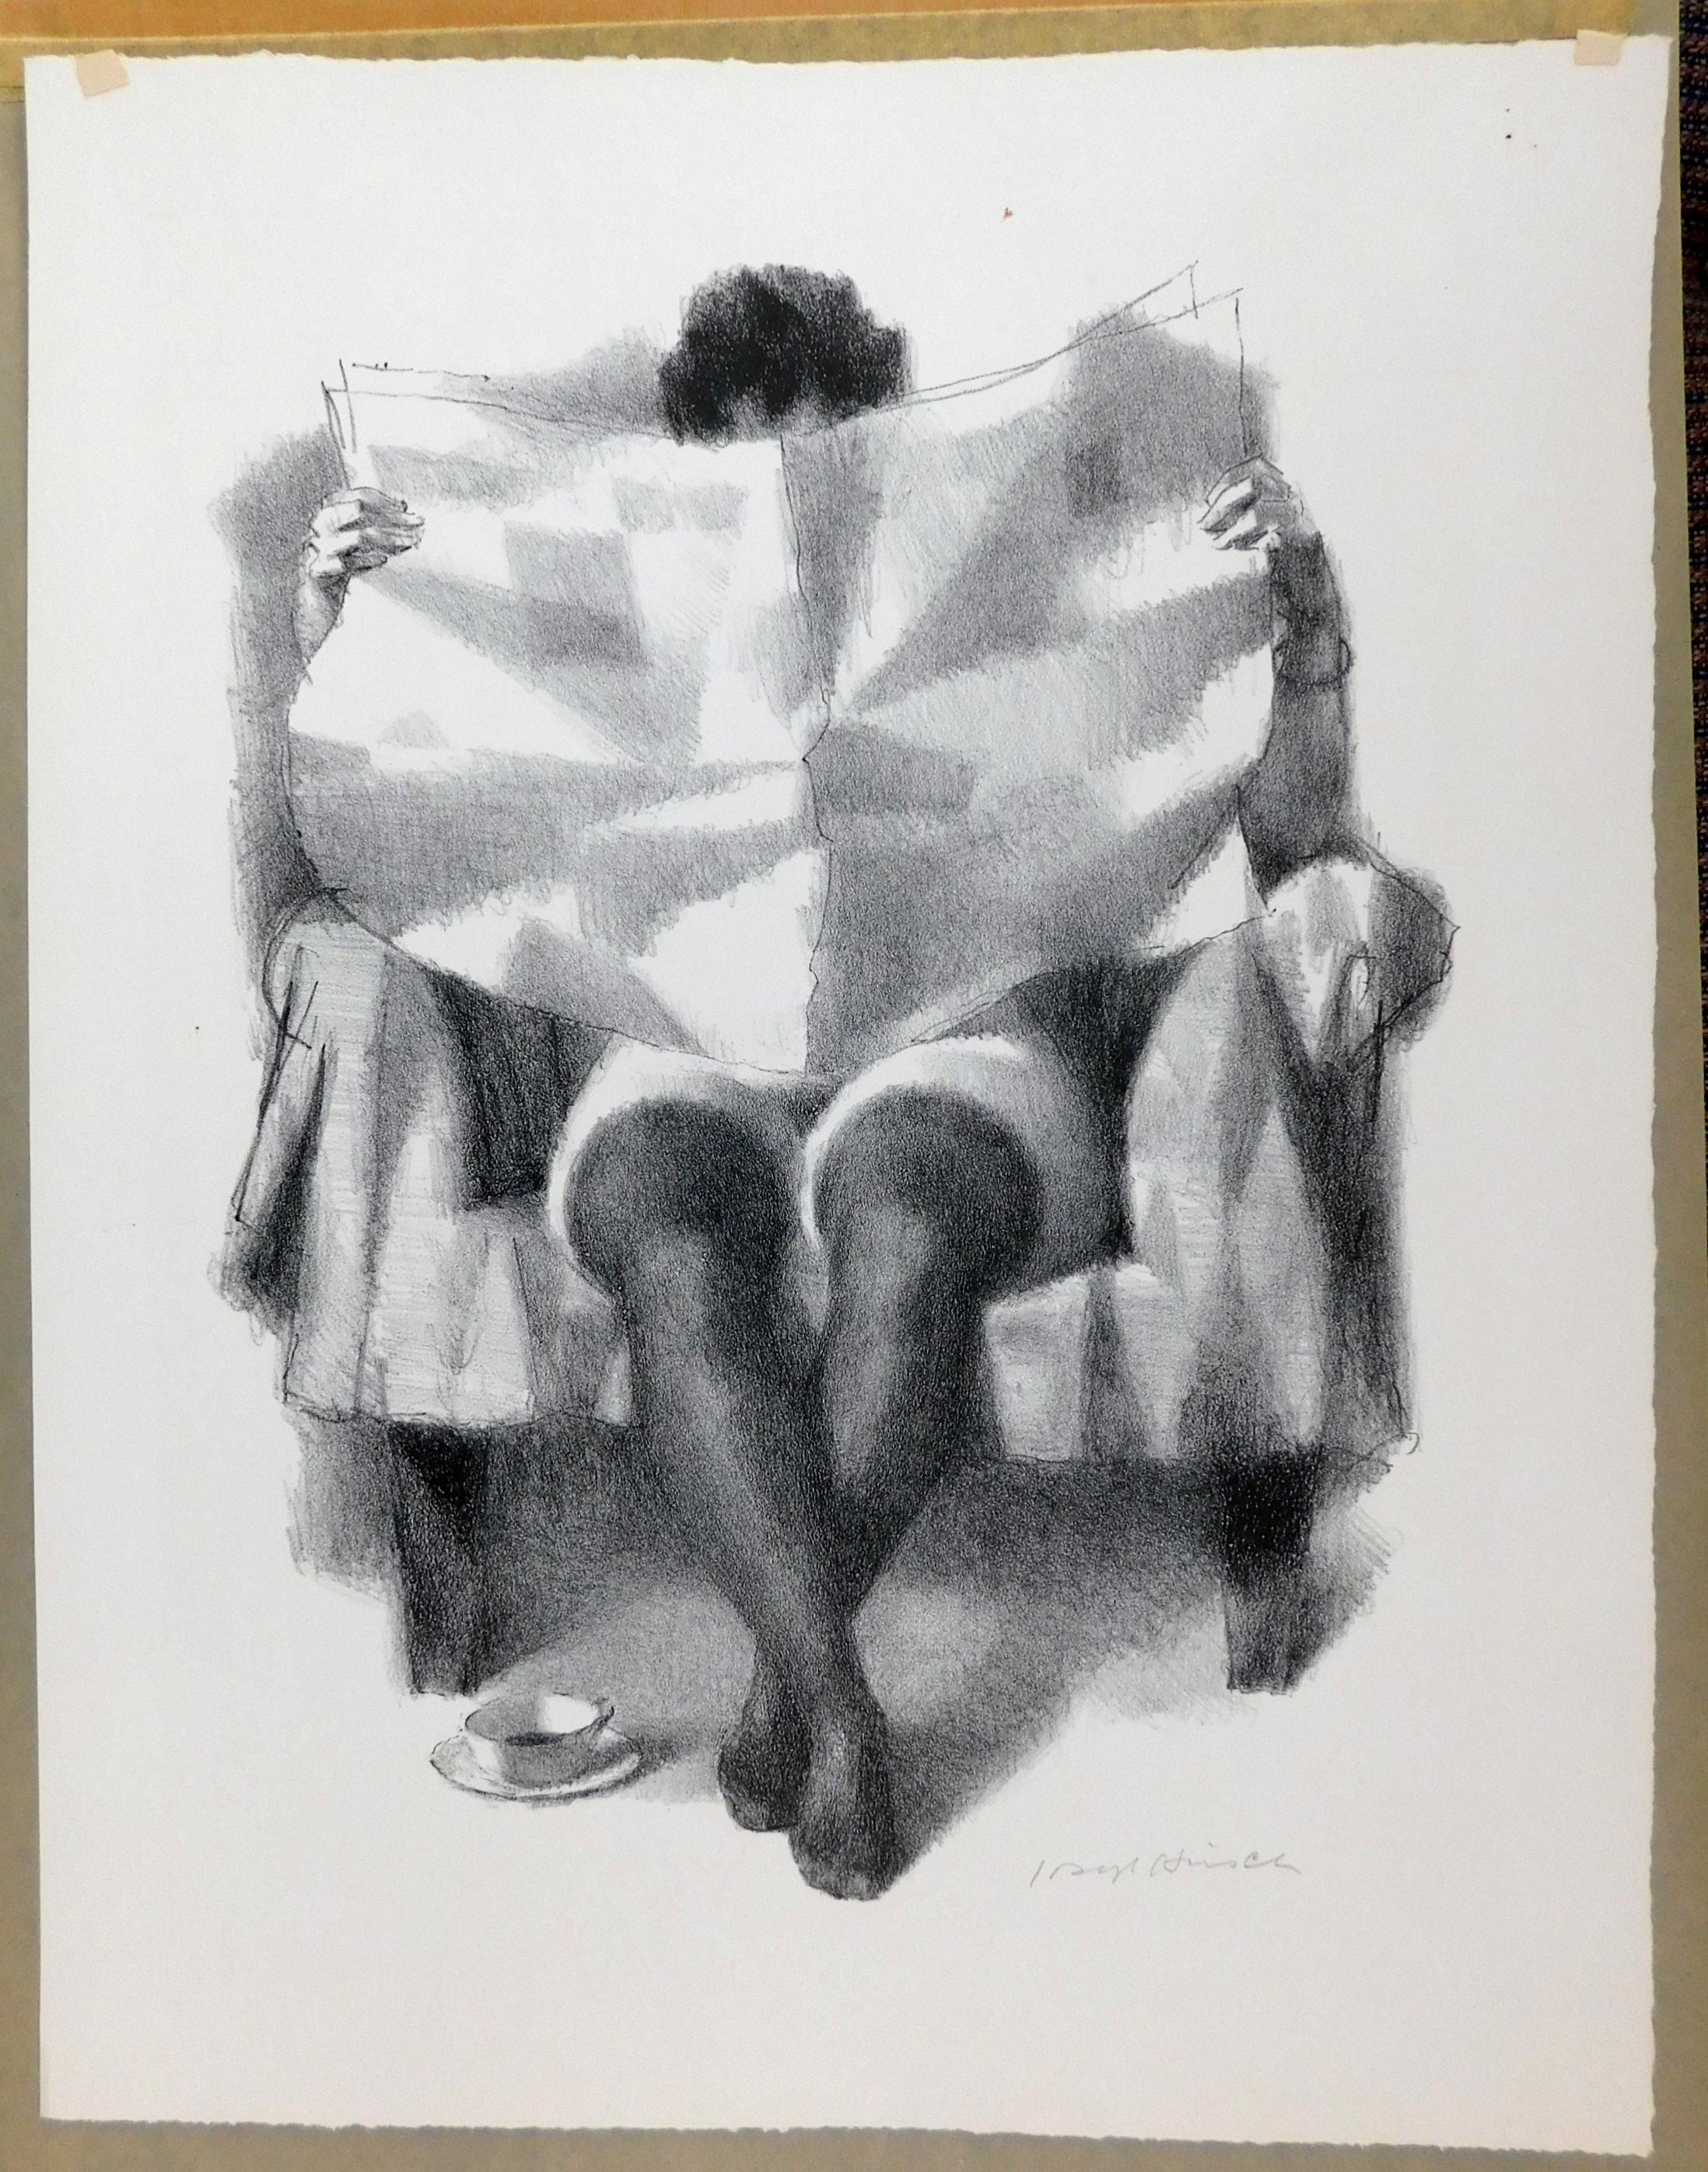 Joseph Hirsch (American, 1910-1981) original lithograph, pencil signed.
Title: Coffee. Edition size: 250. Catalog raisonne reference: Cole 38.
Image size: 13